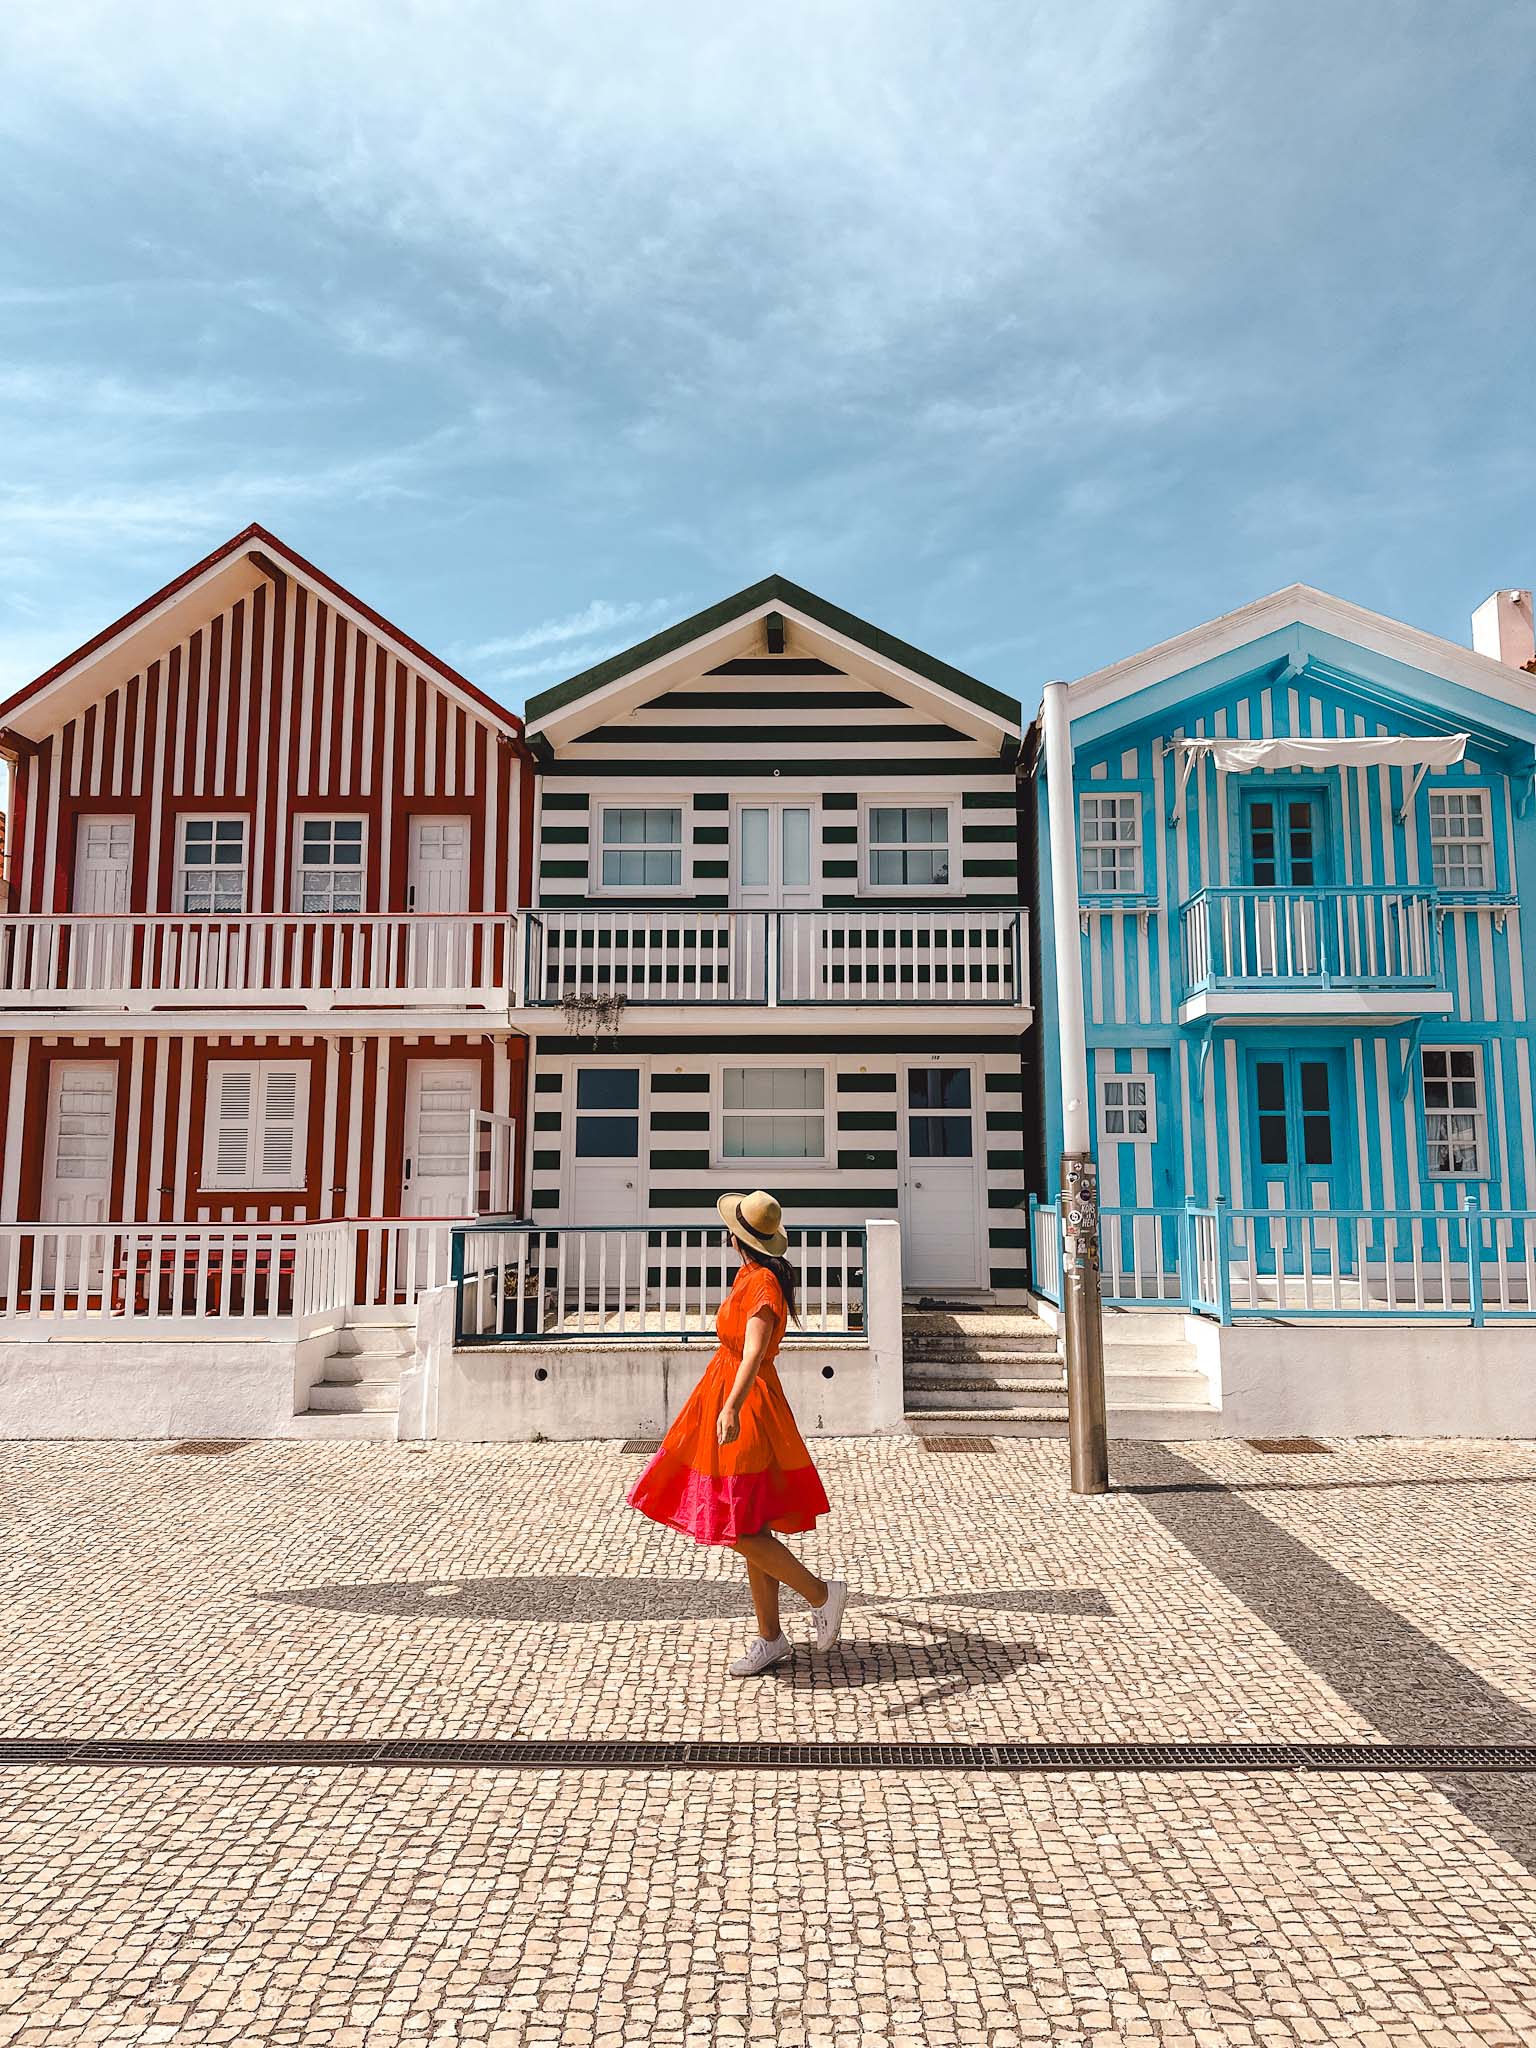 Best Instagram spots in Aveiro, Portugal - striped houses in Costa Nova